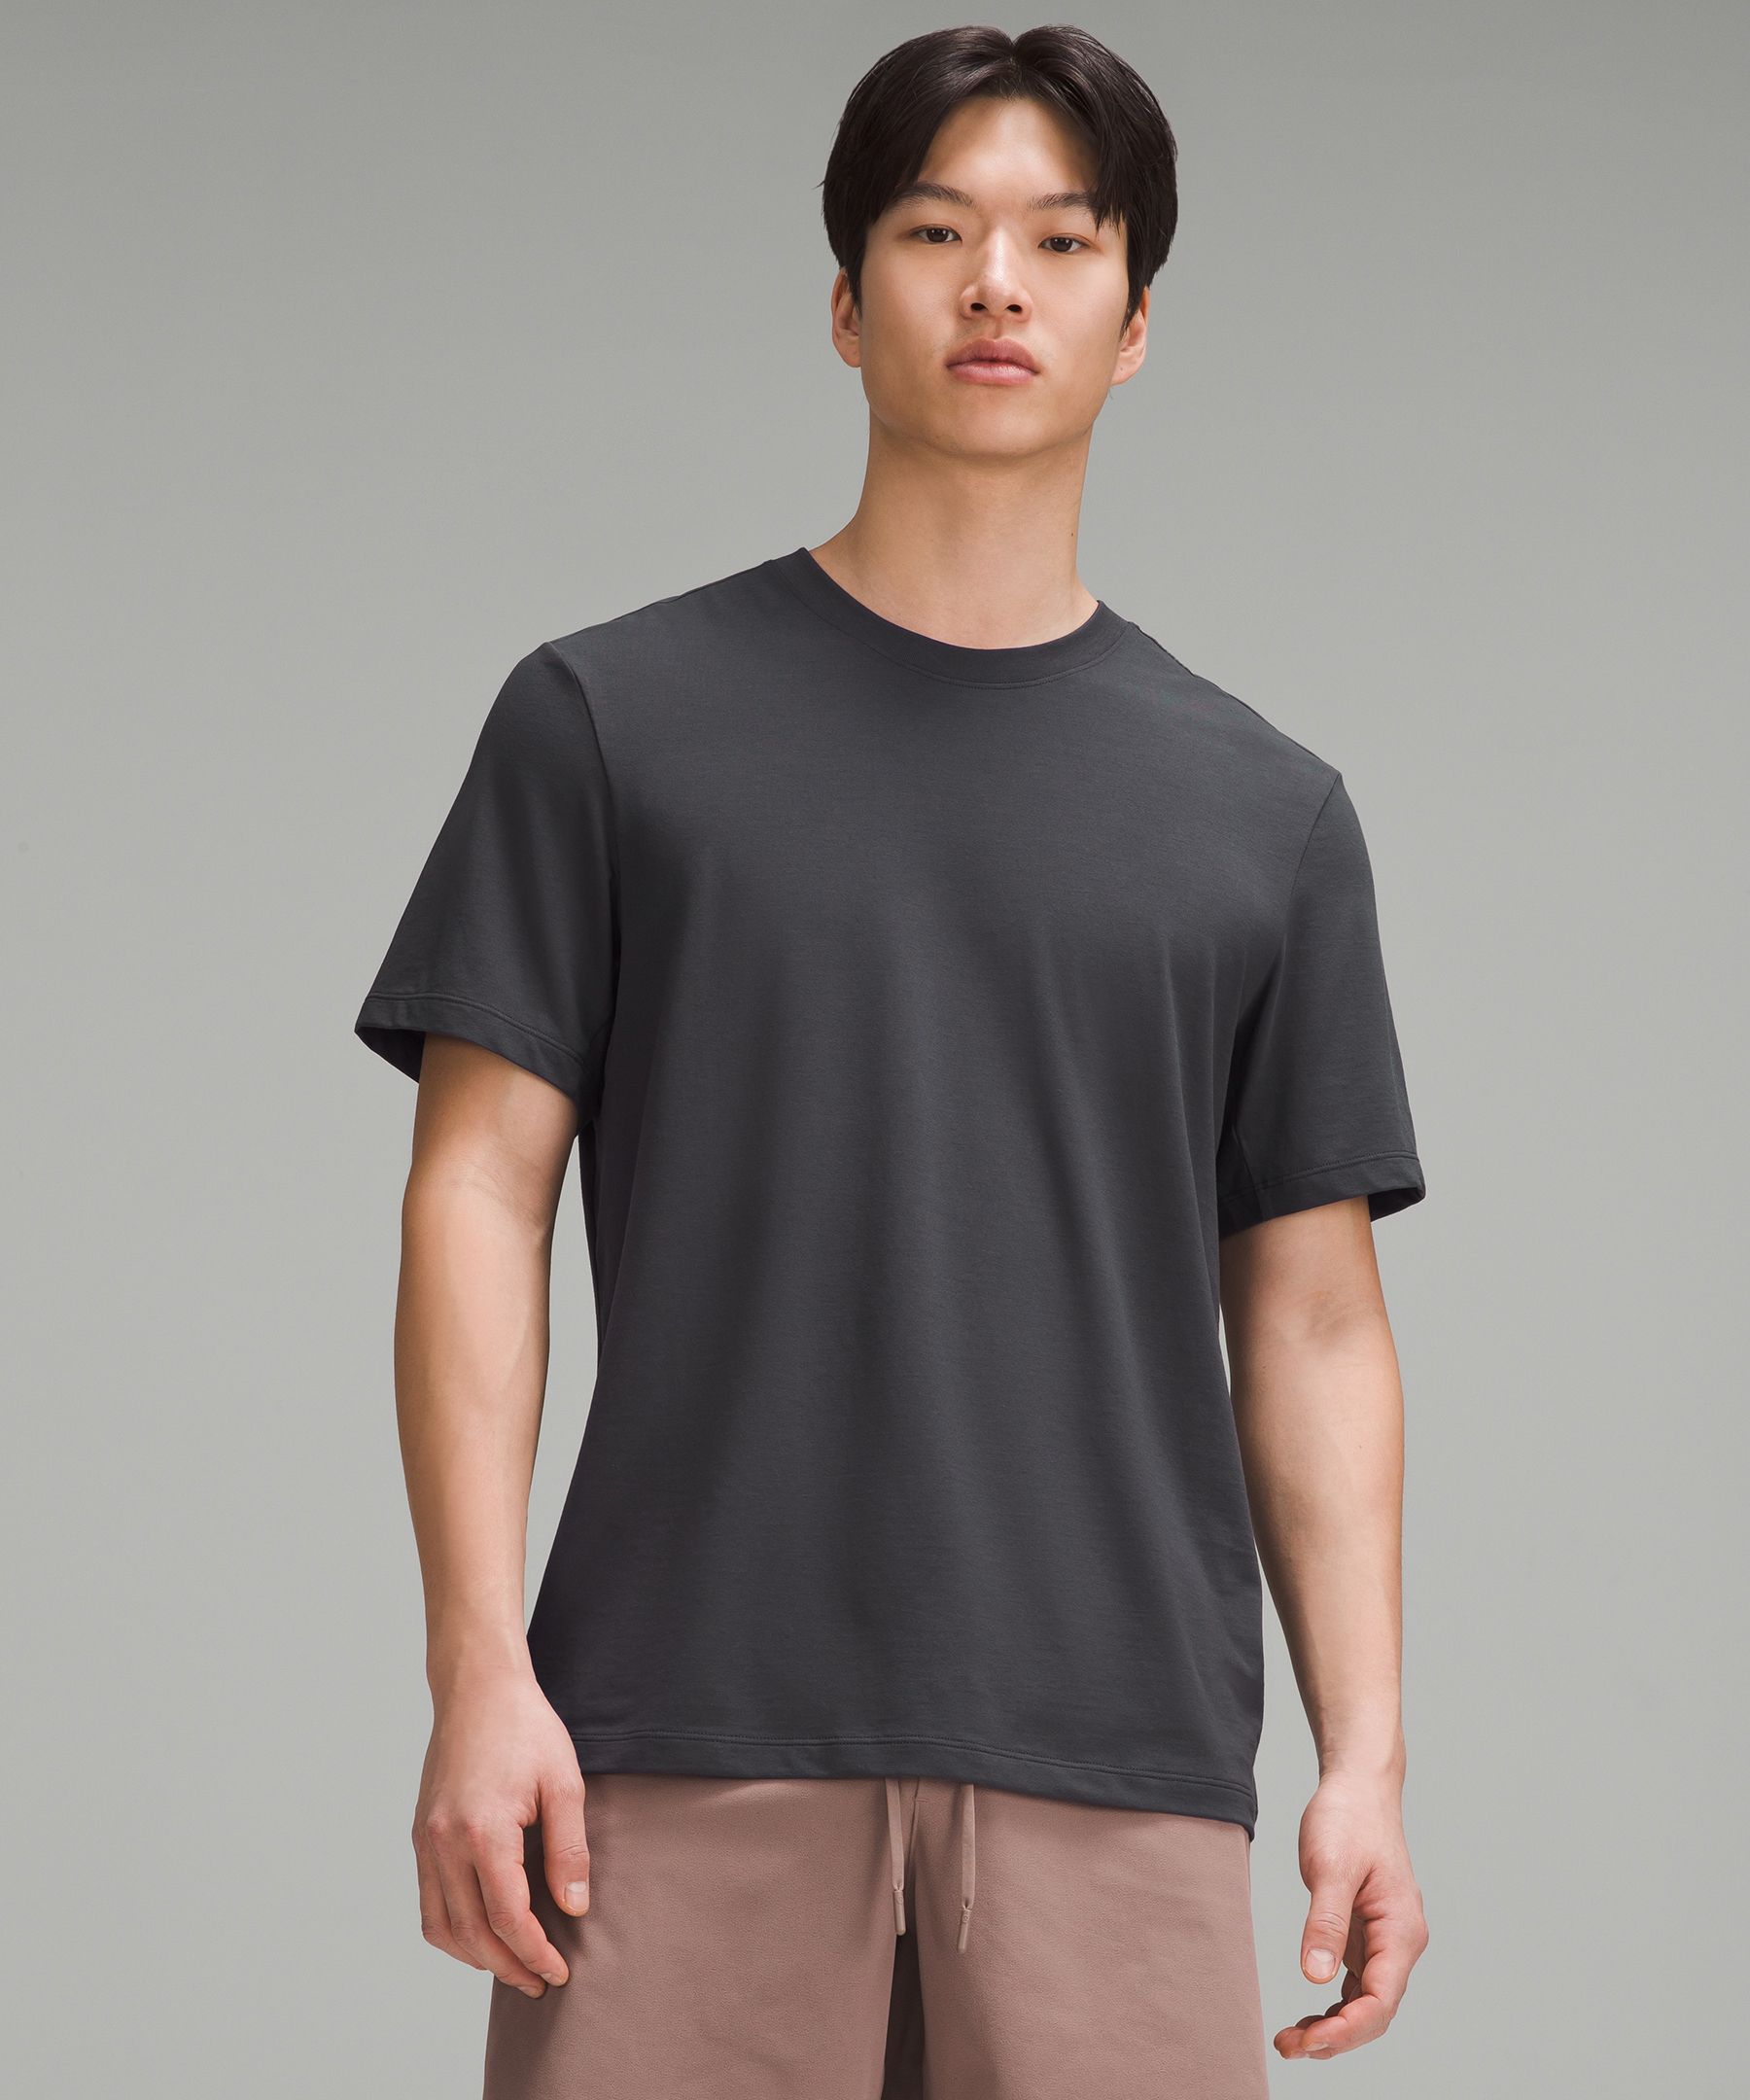 Lululemon Athletica Gray Active T-Shirt Size 8 - 39% off